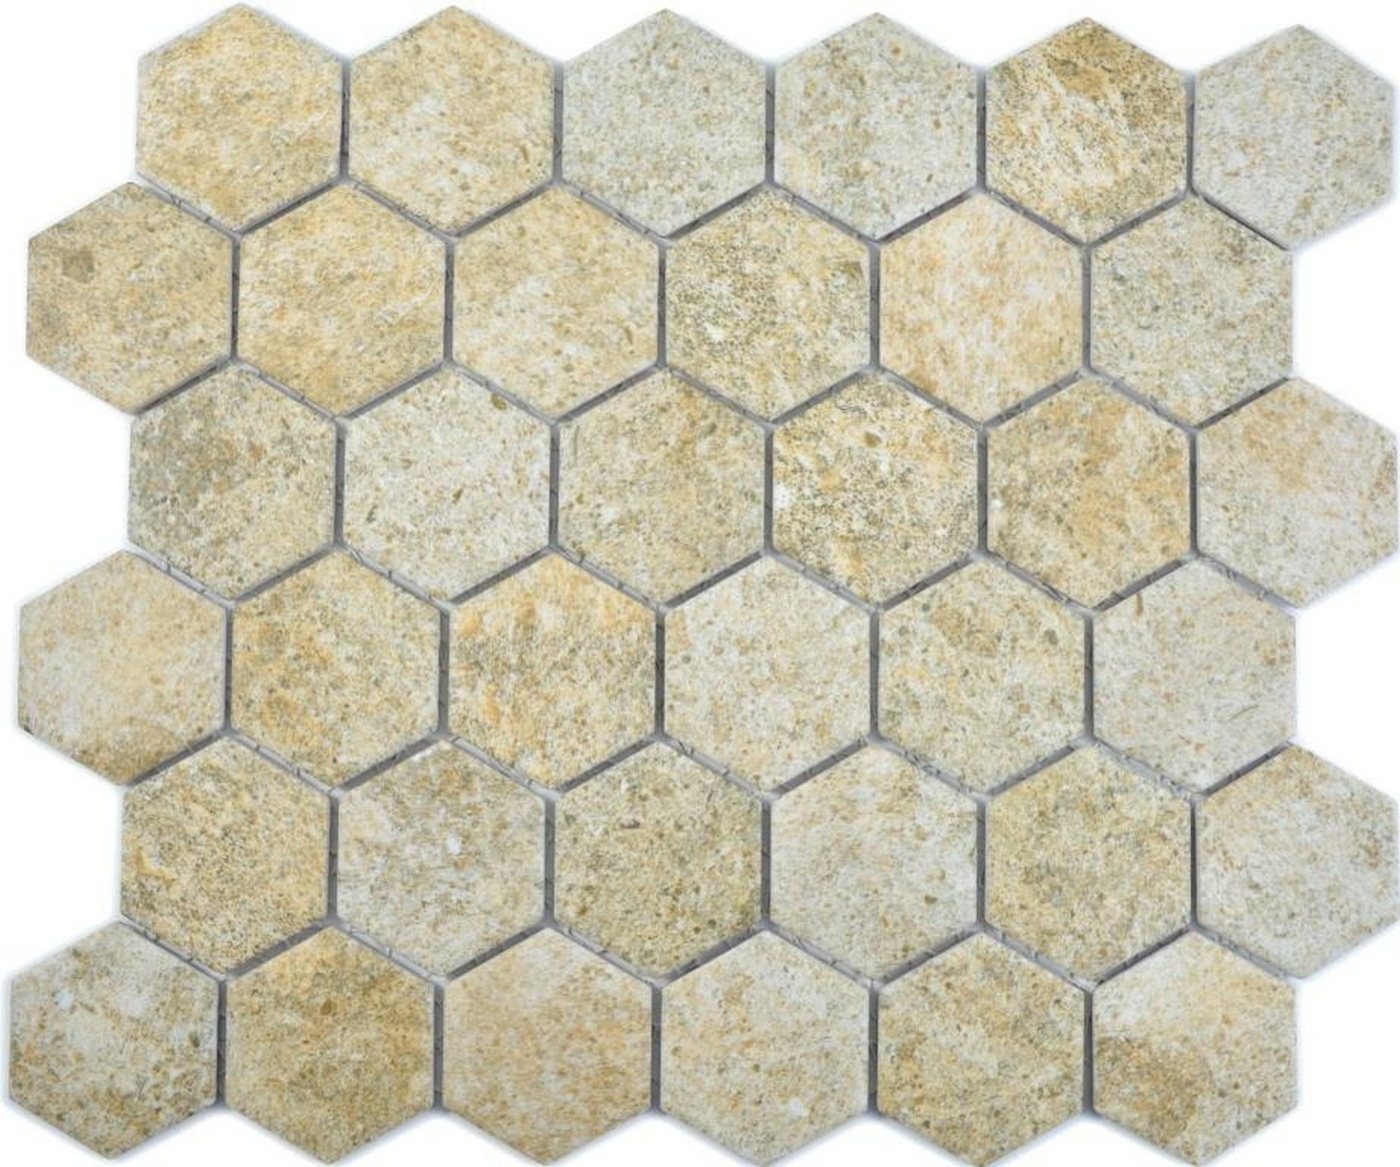 Mosani Mosaikfliesen Hexagonale Sechseck Mosaik Fliese Keramik Granit beige von Mosani